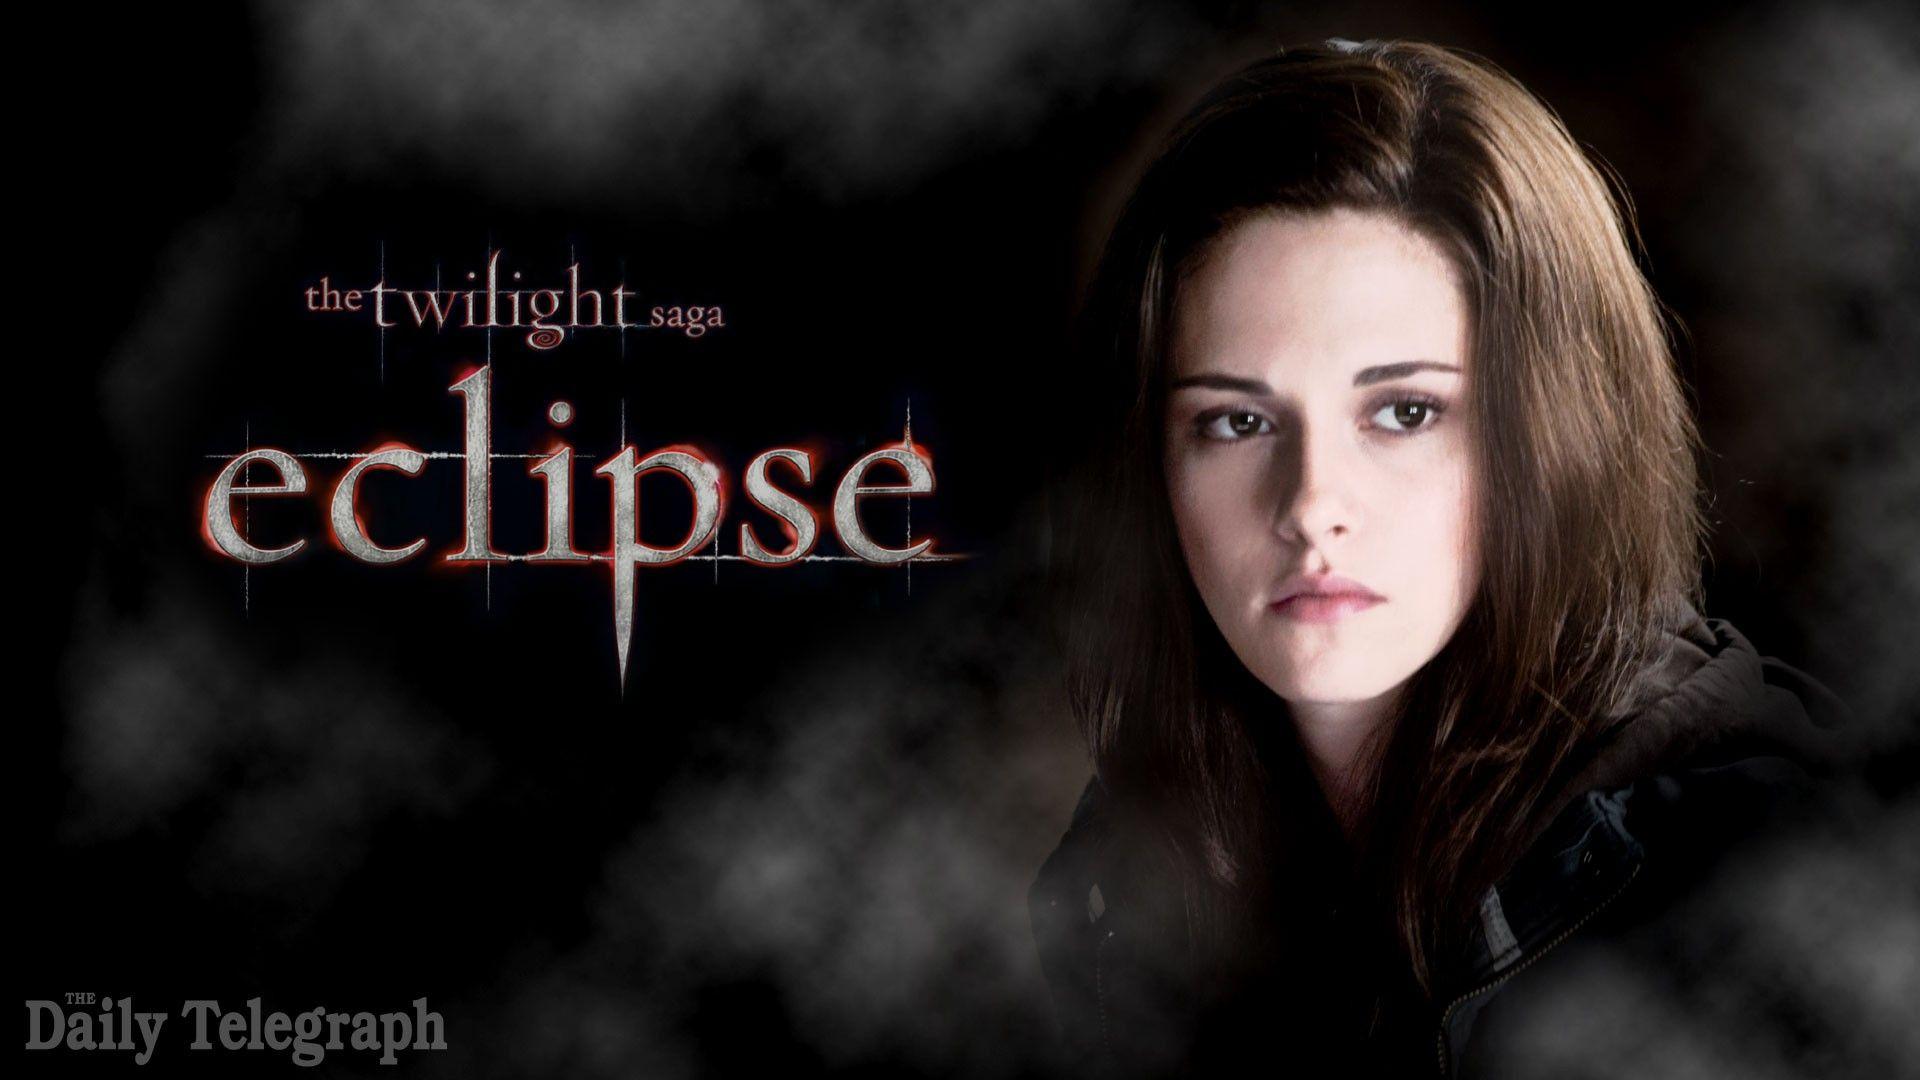 The Twilight Saga надпись